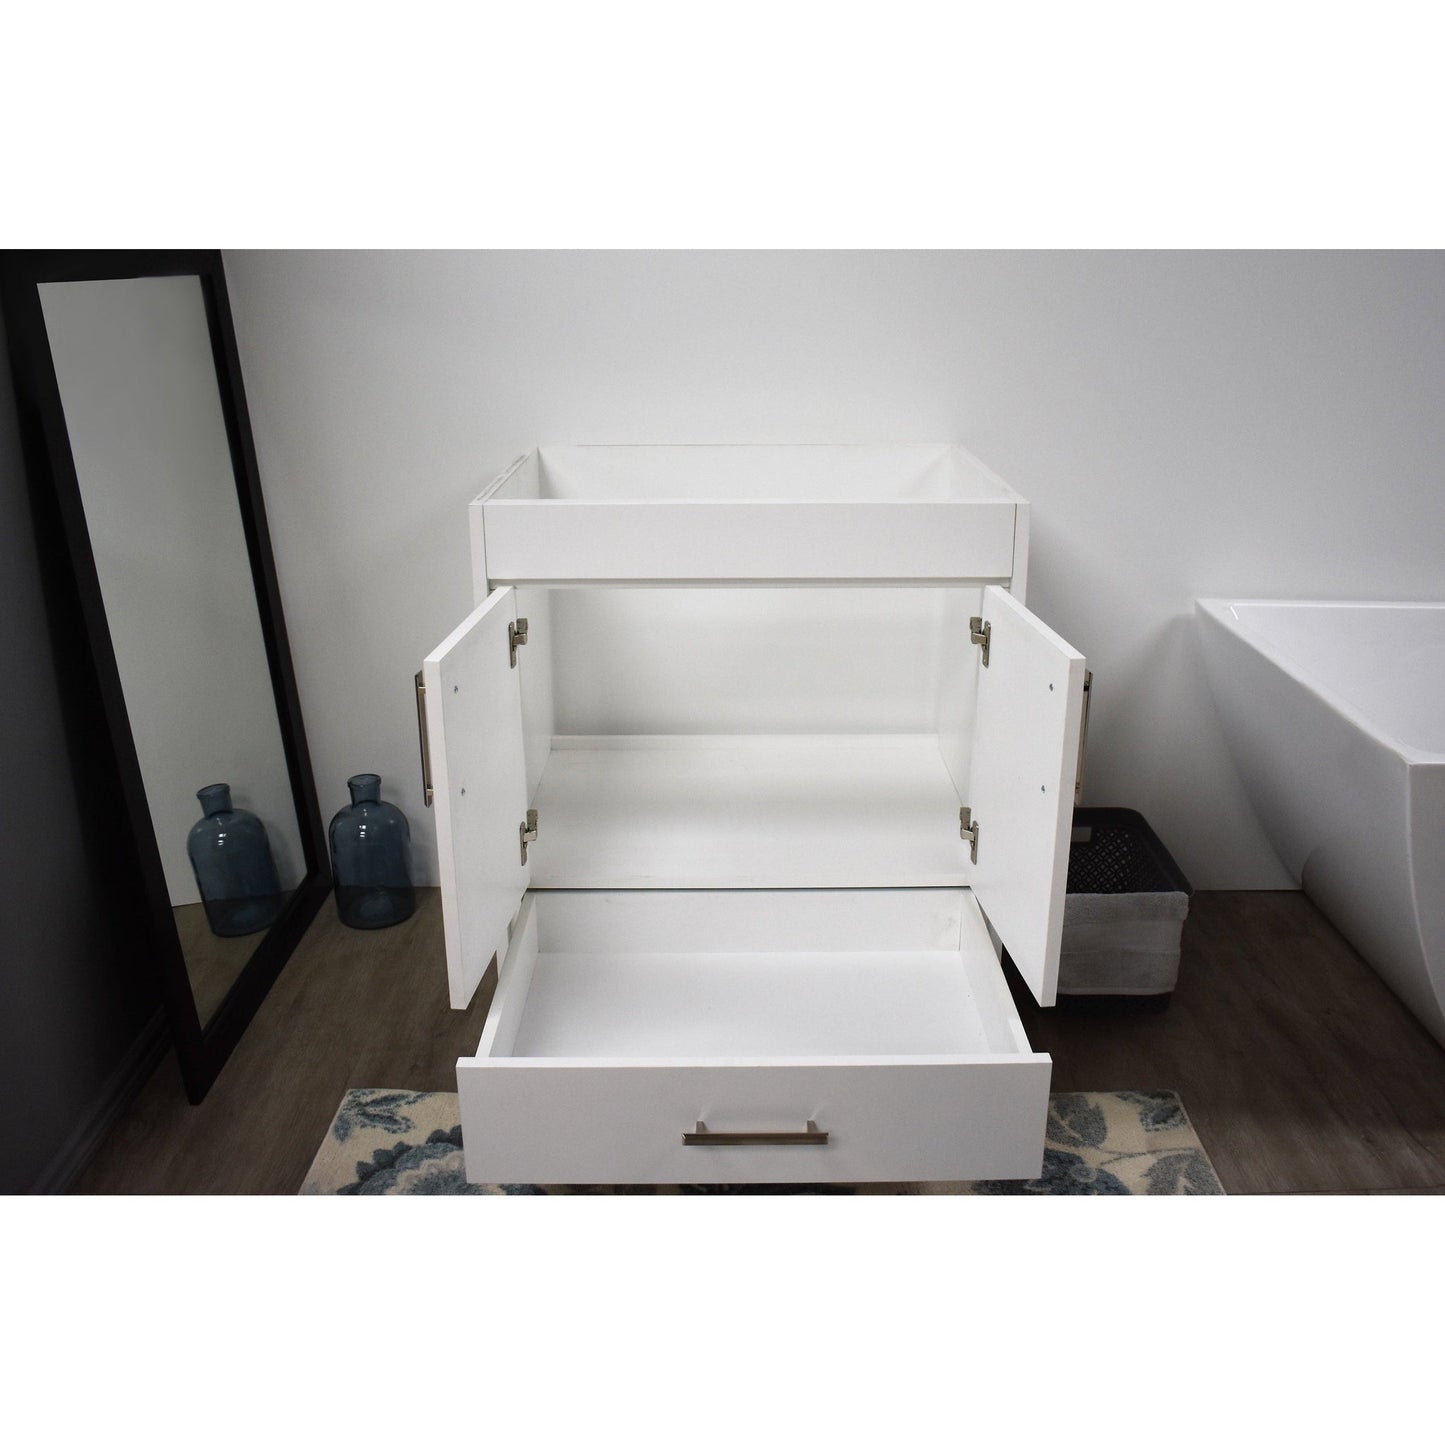 Volpa USA Capri 30" x 22" White Modern Bathroom Vanity With Brushed Nickel Edge Handles